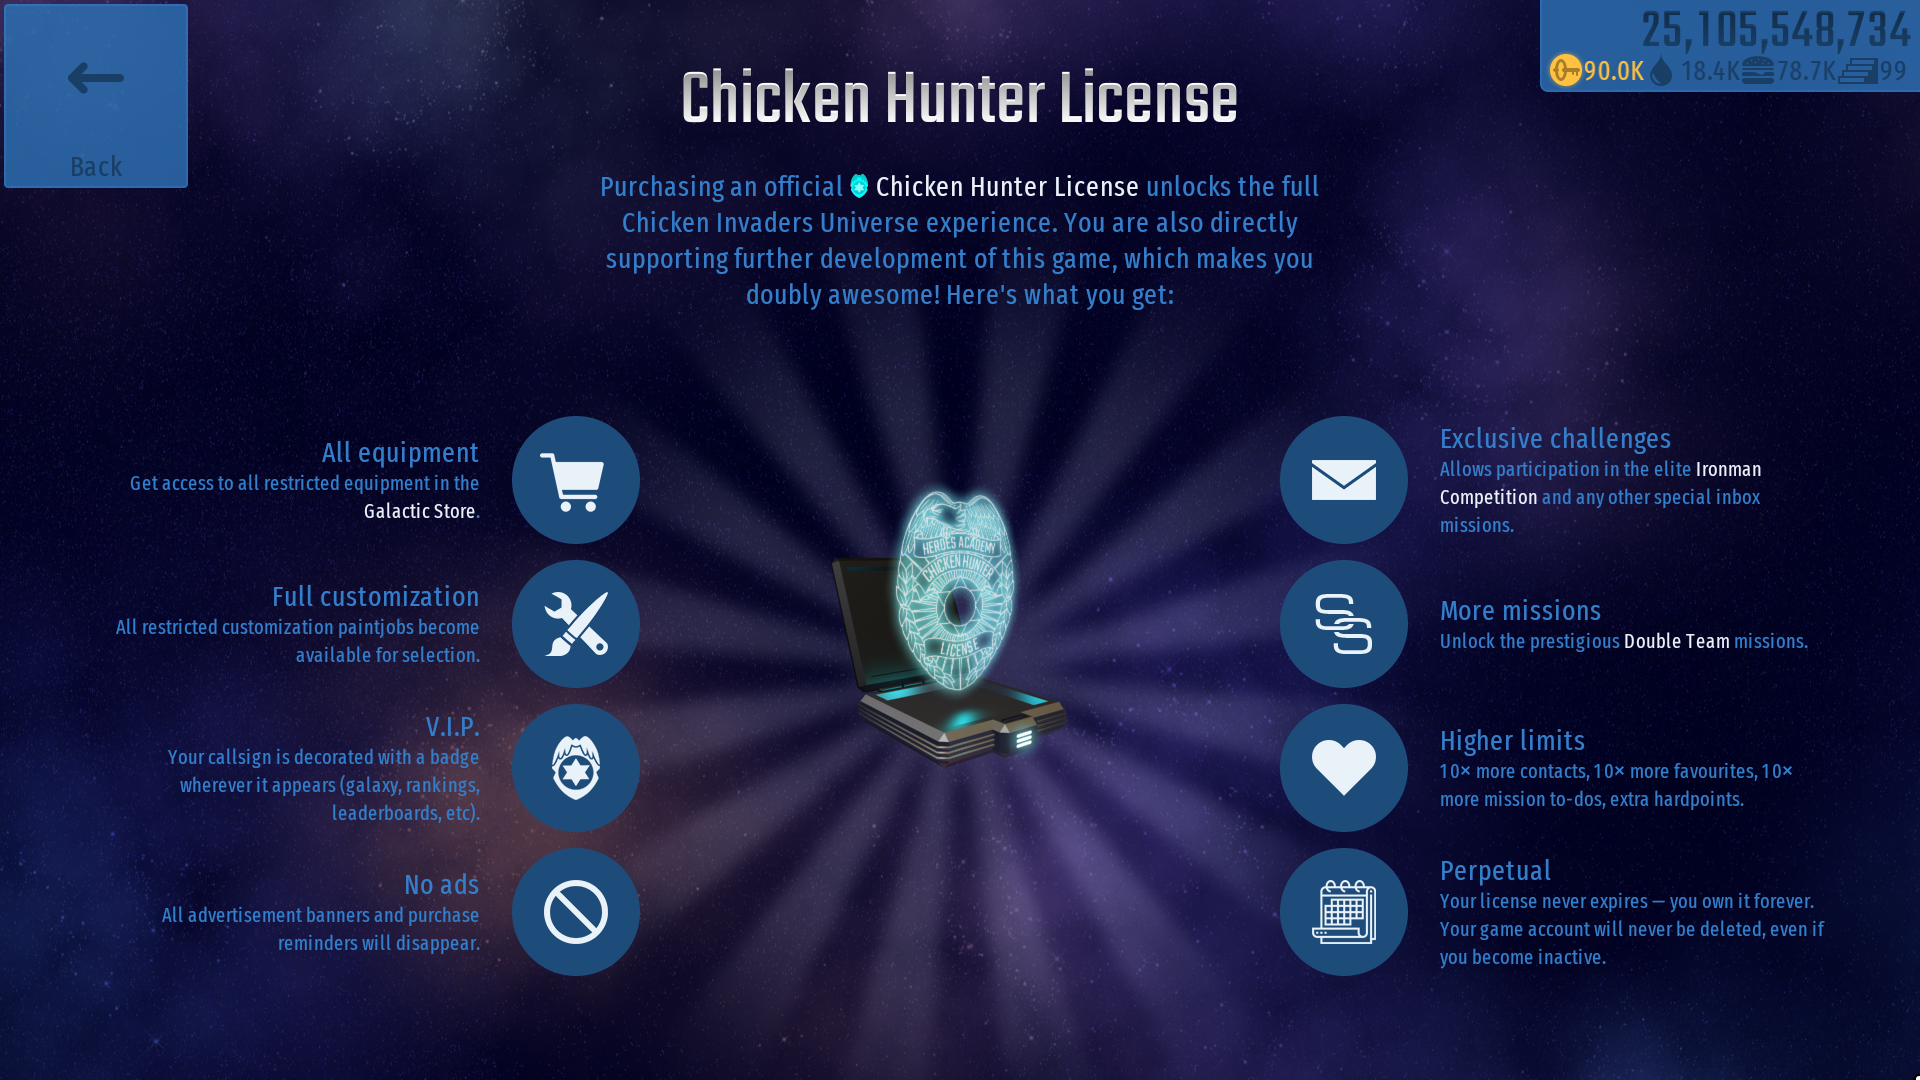 win chicken hunter license to grill